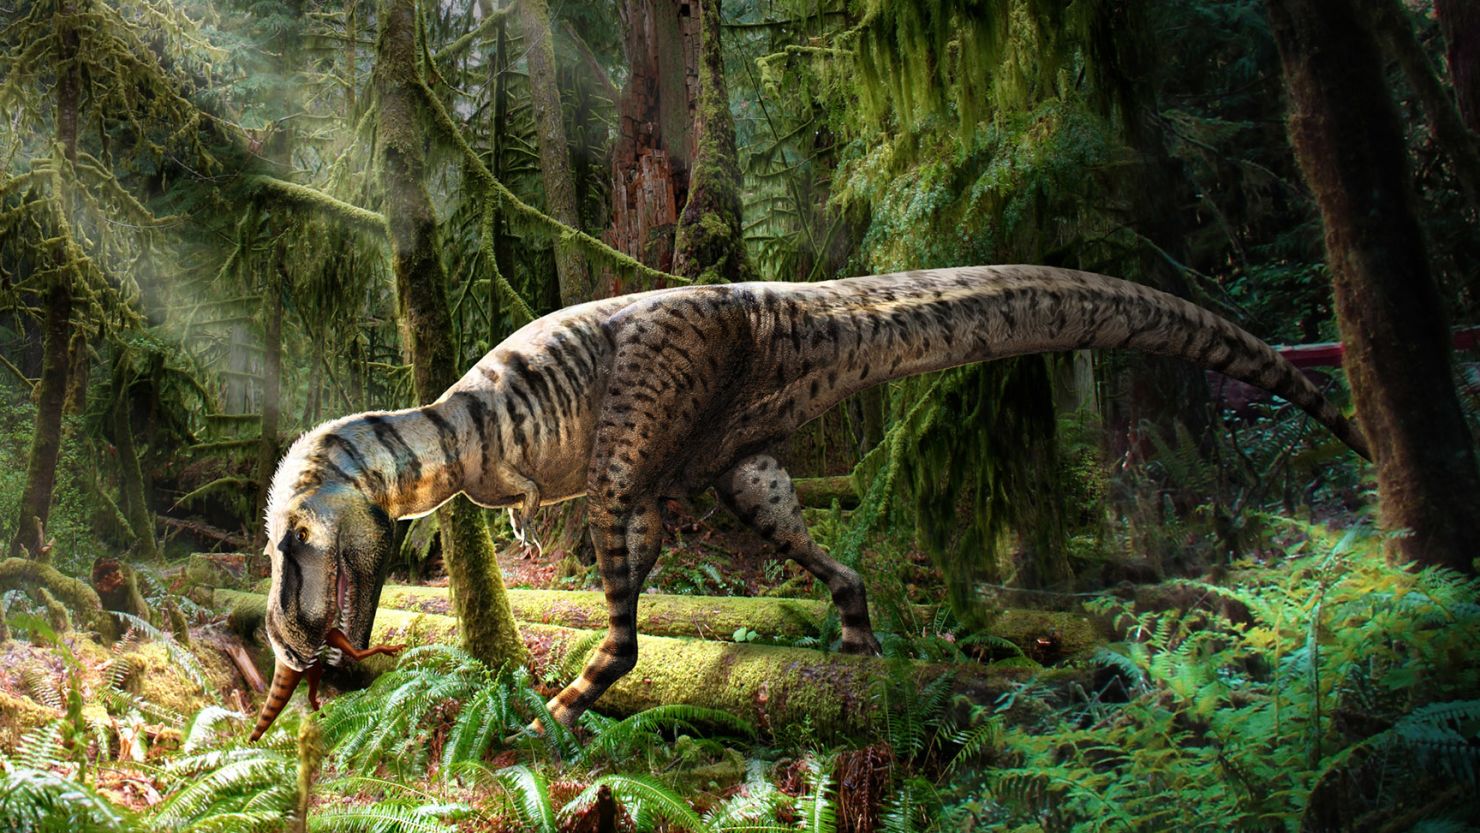 Teen tyrannosaur had a taste for baby dinos, rare fossil reveals